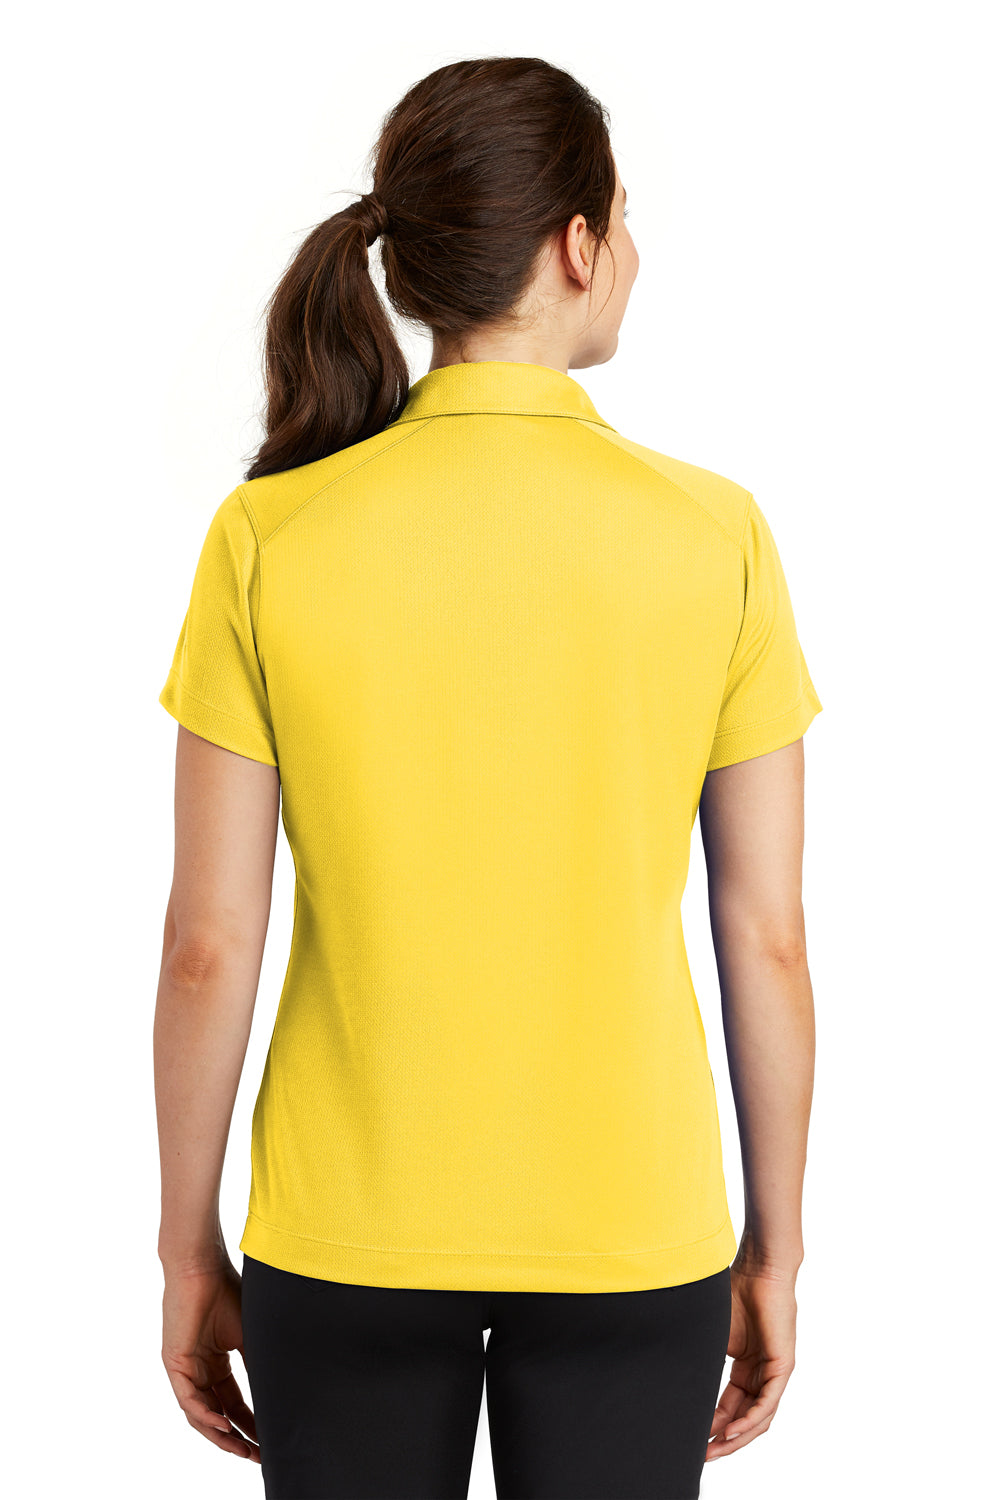 Nike 354064 Womens Dri-Fit Moisture Wicking Short Sleeve Polo Shirt Yellow Back